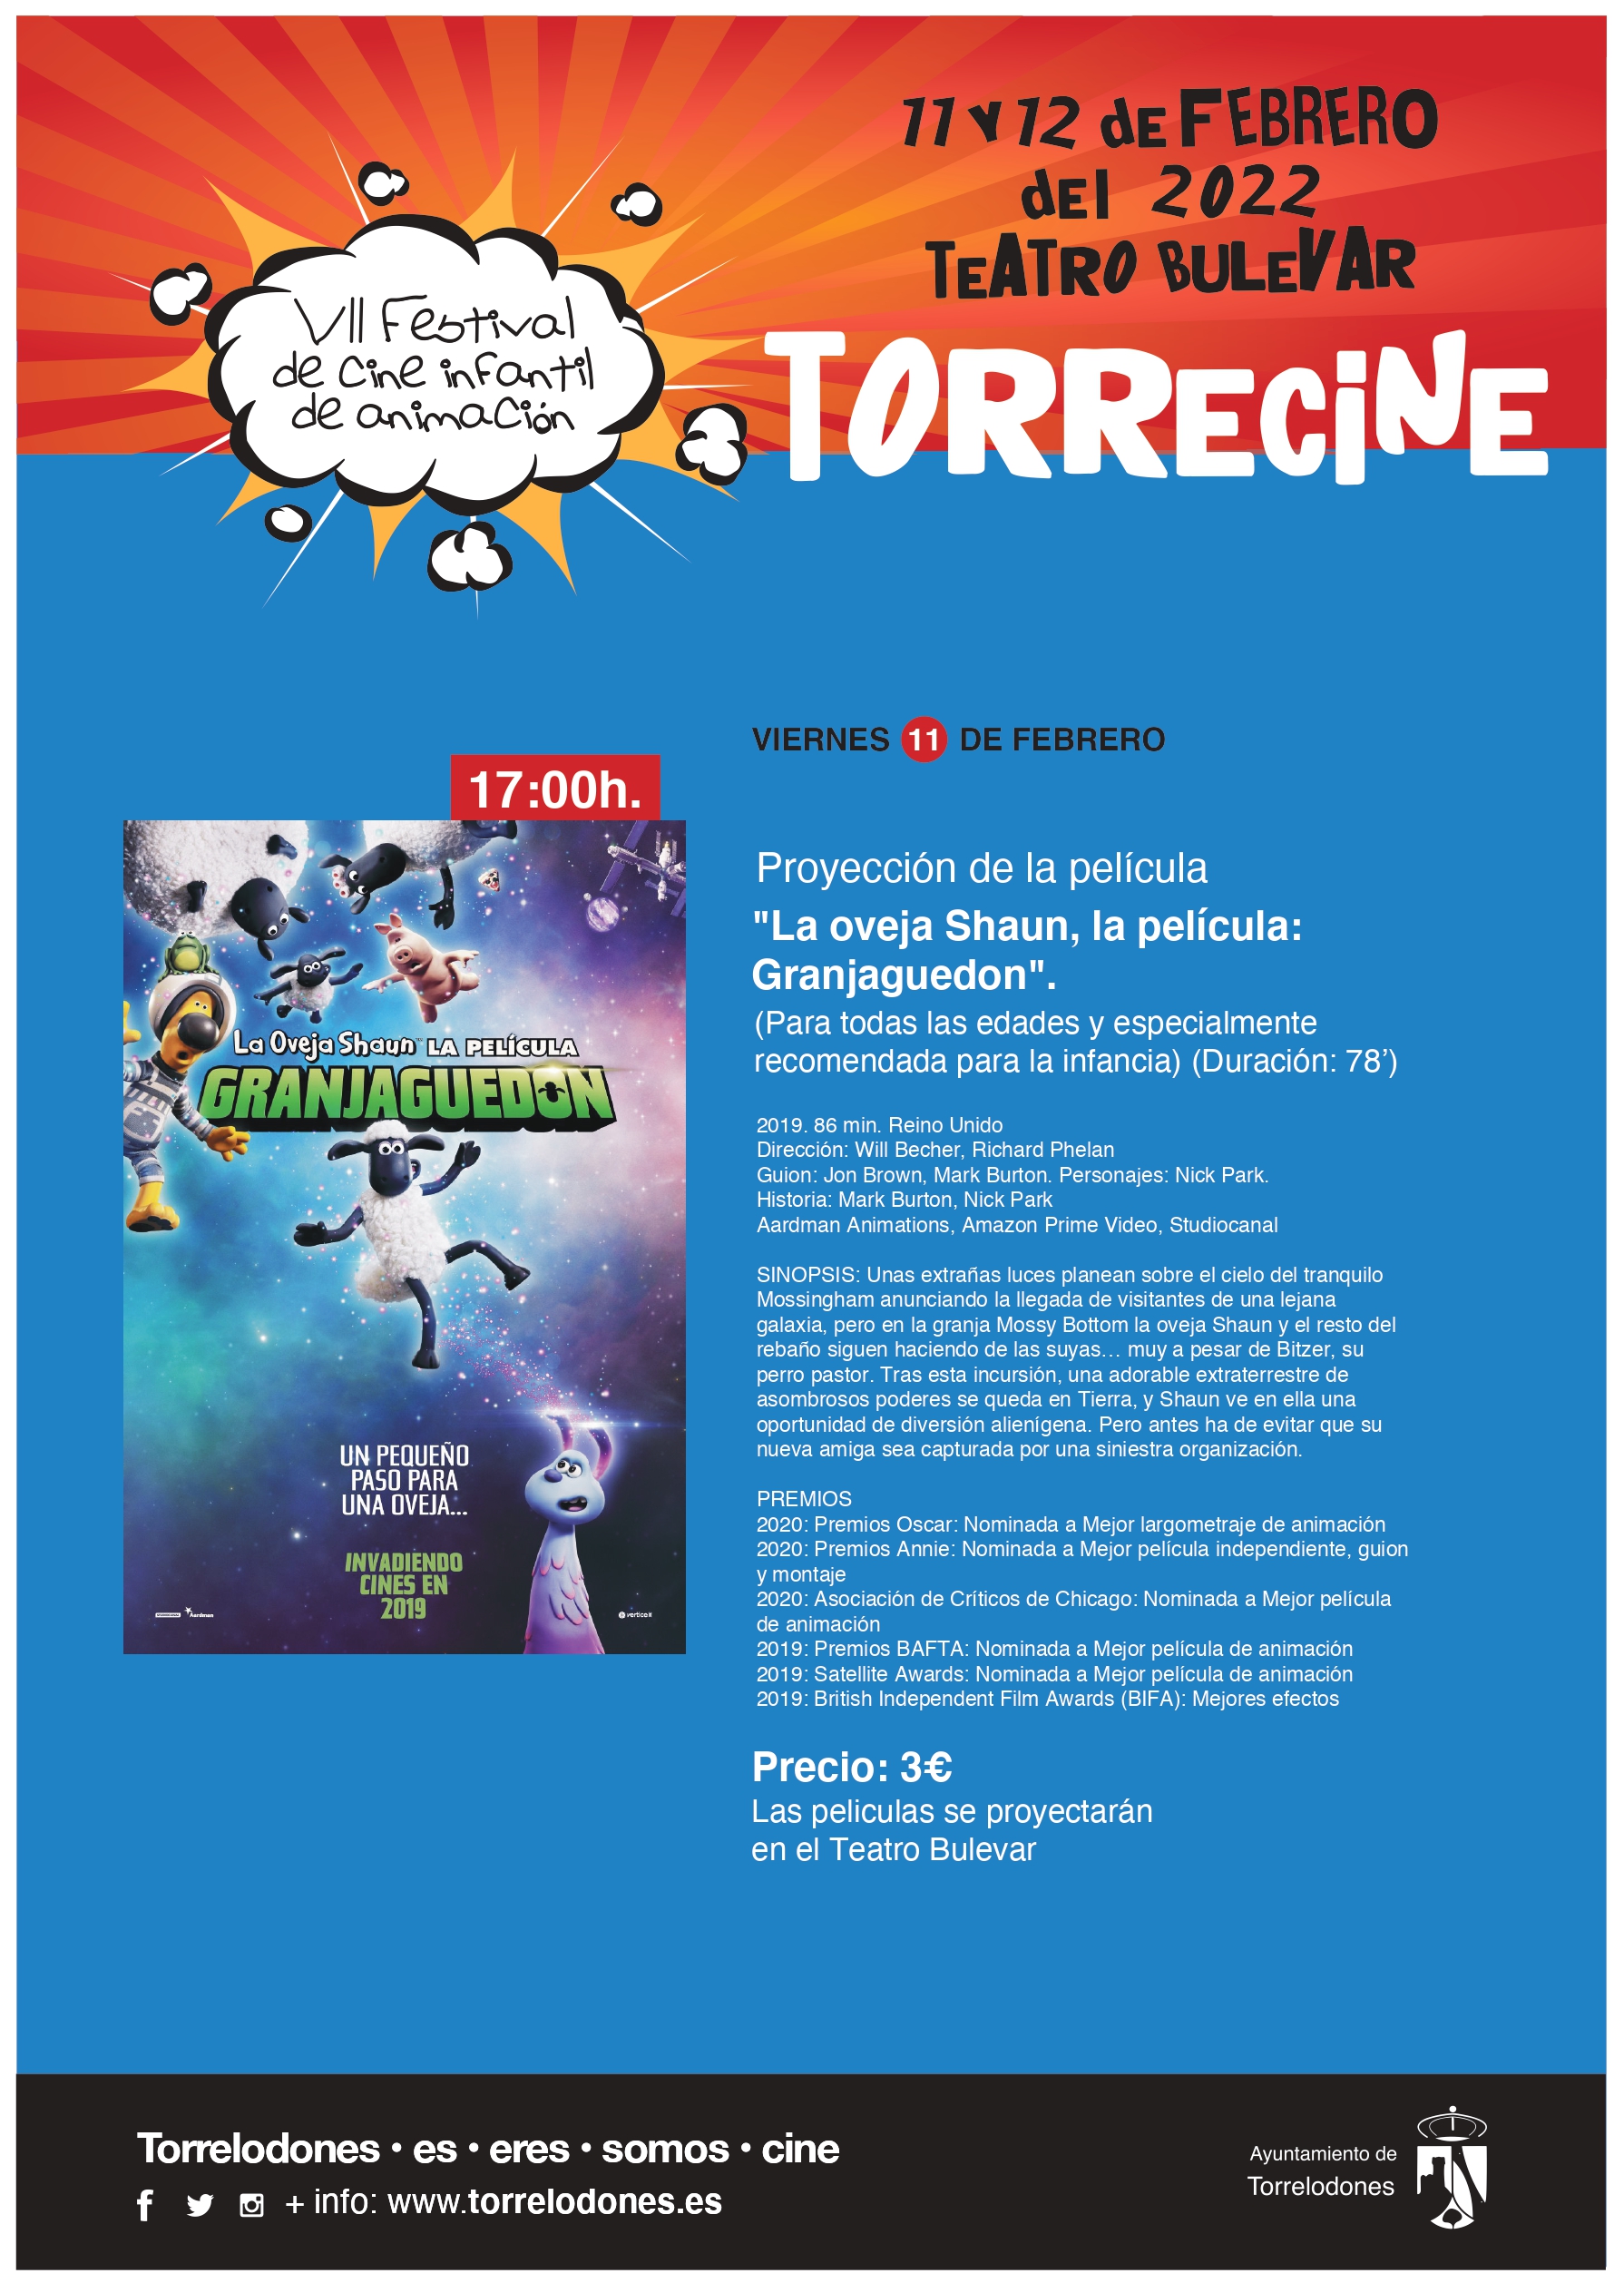 torrecine 18 01 22 1 page 0001